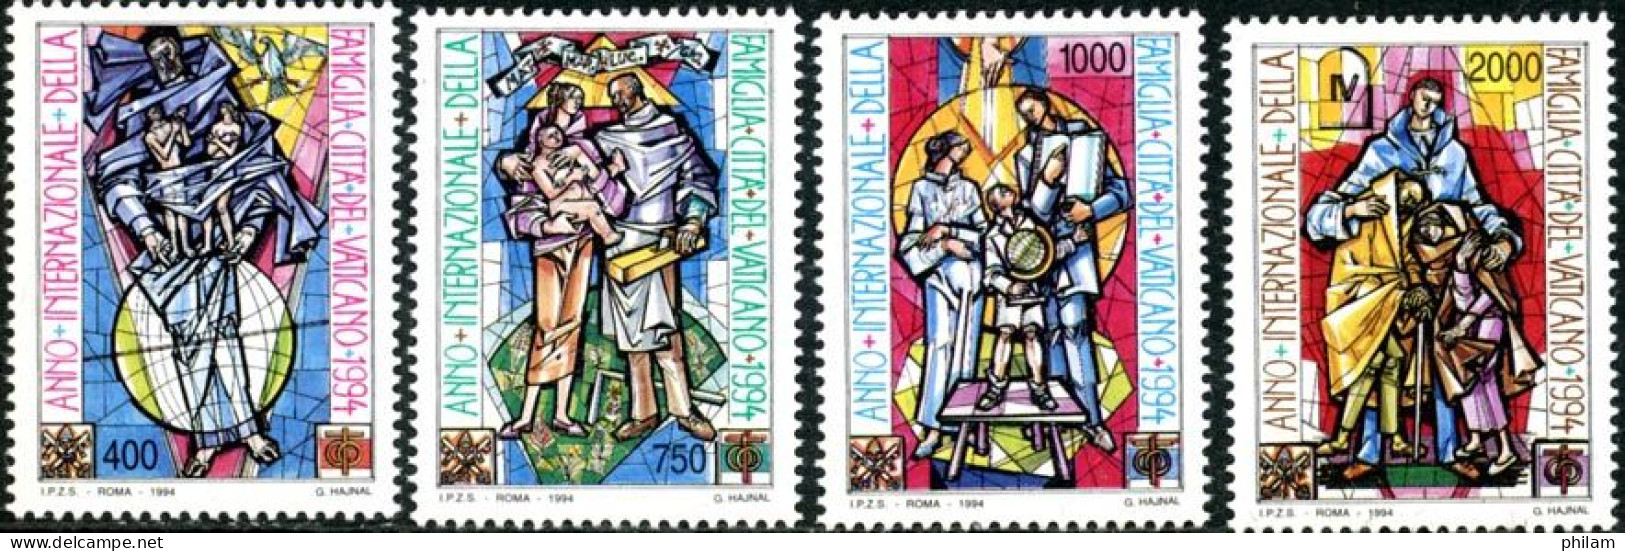 VATICAN 1994 - Année Internationale De La Famille - 4 V. - Unused Stamps